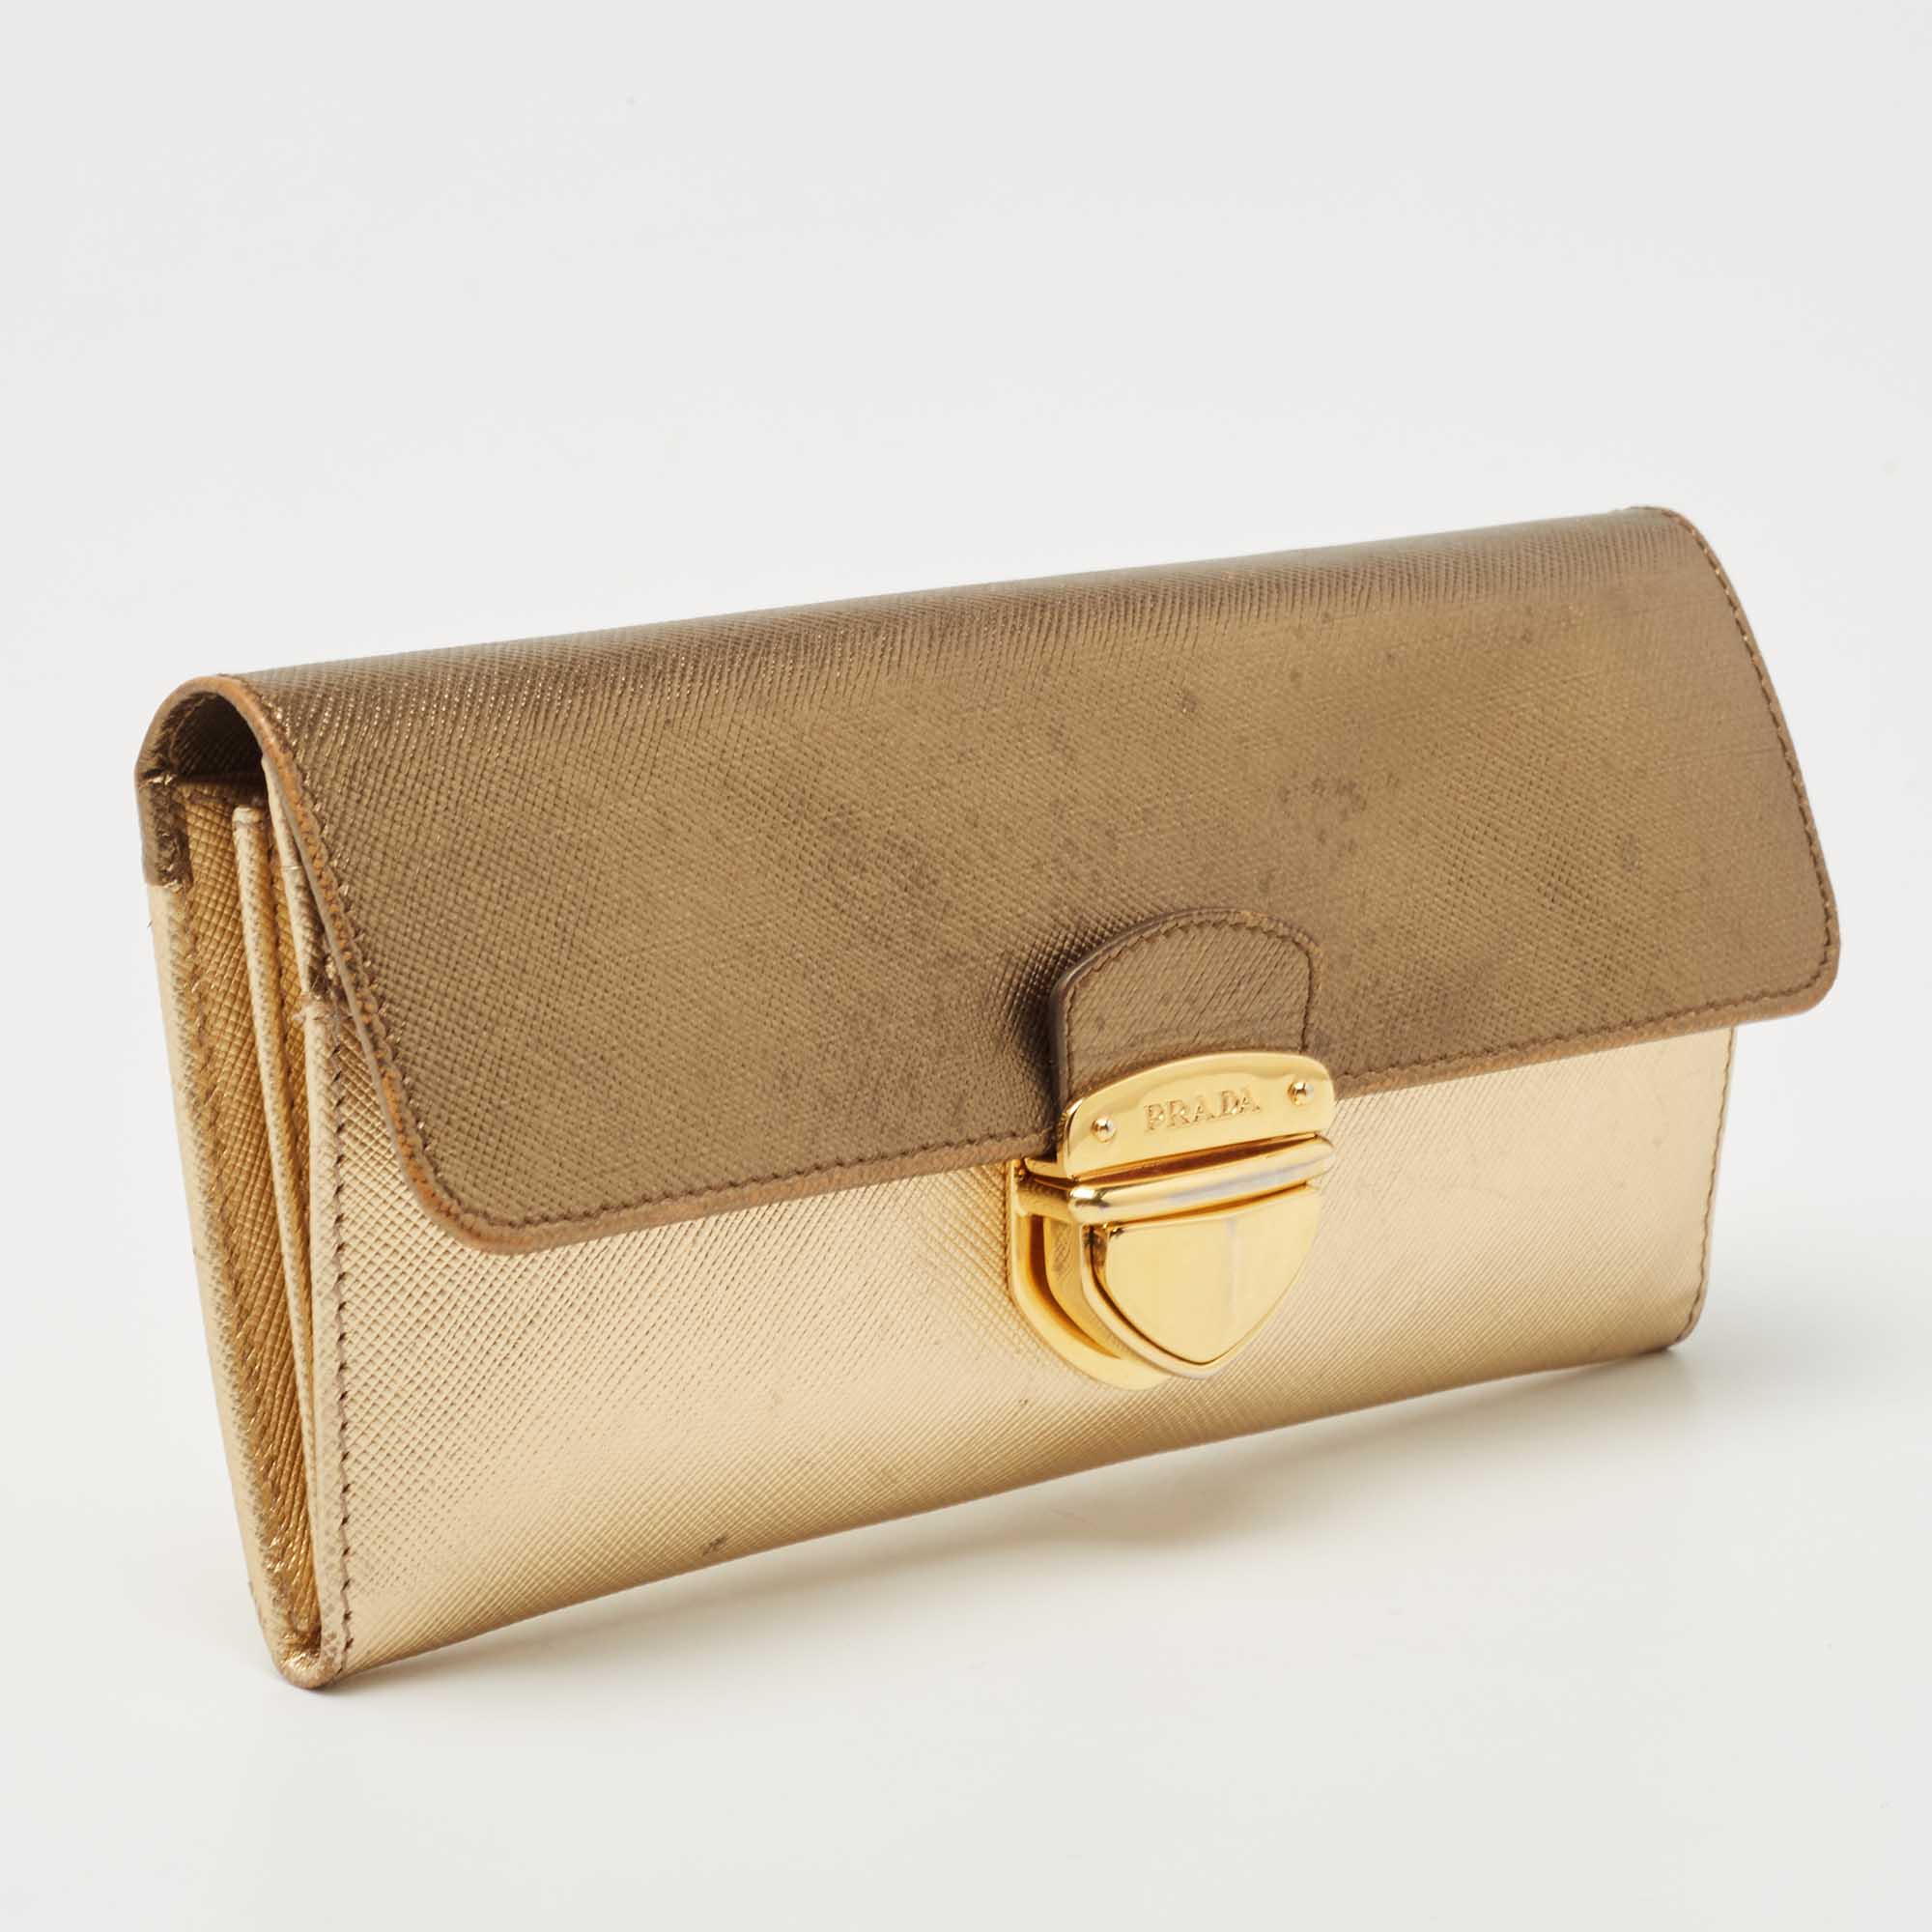 Prada Gold Saffiano Leather Pushlock Flap Wallet